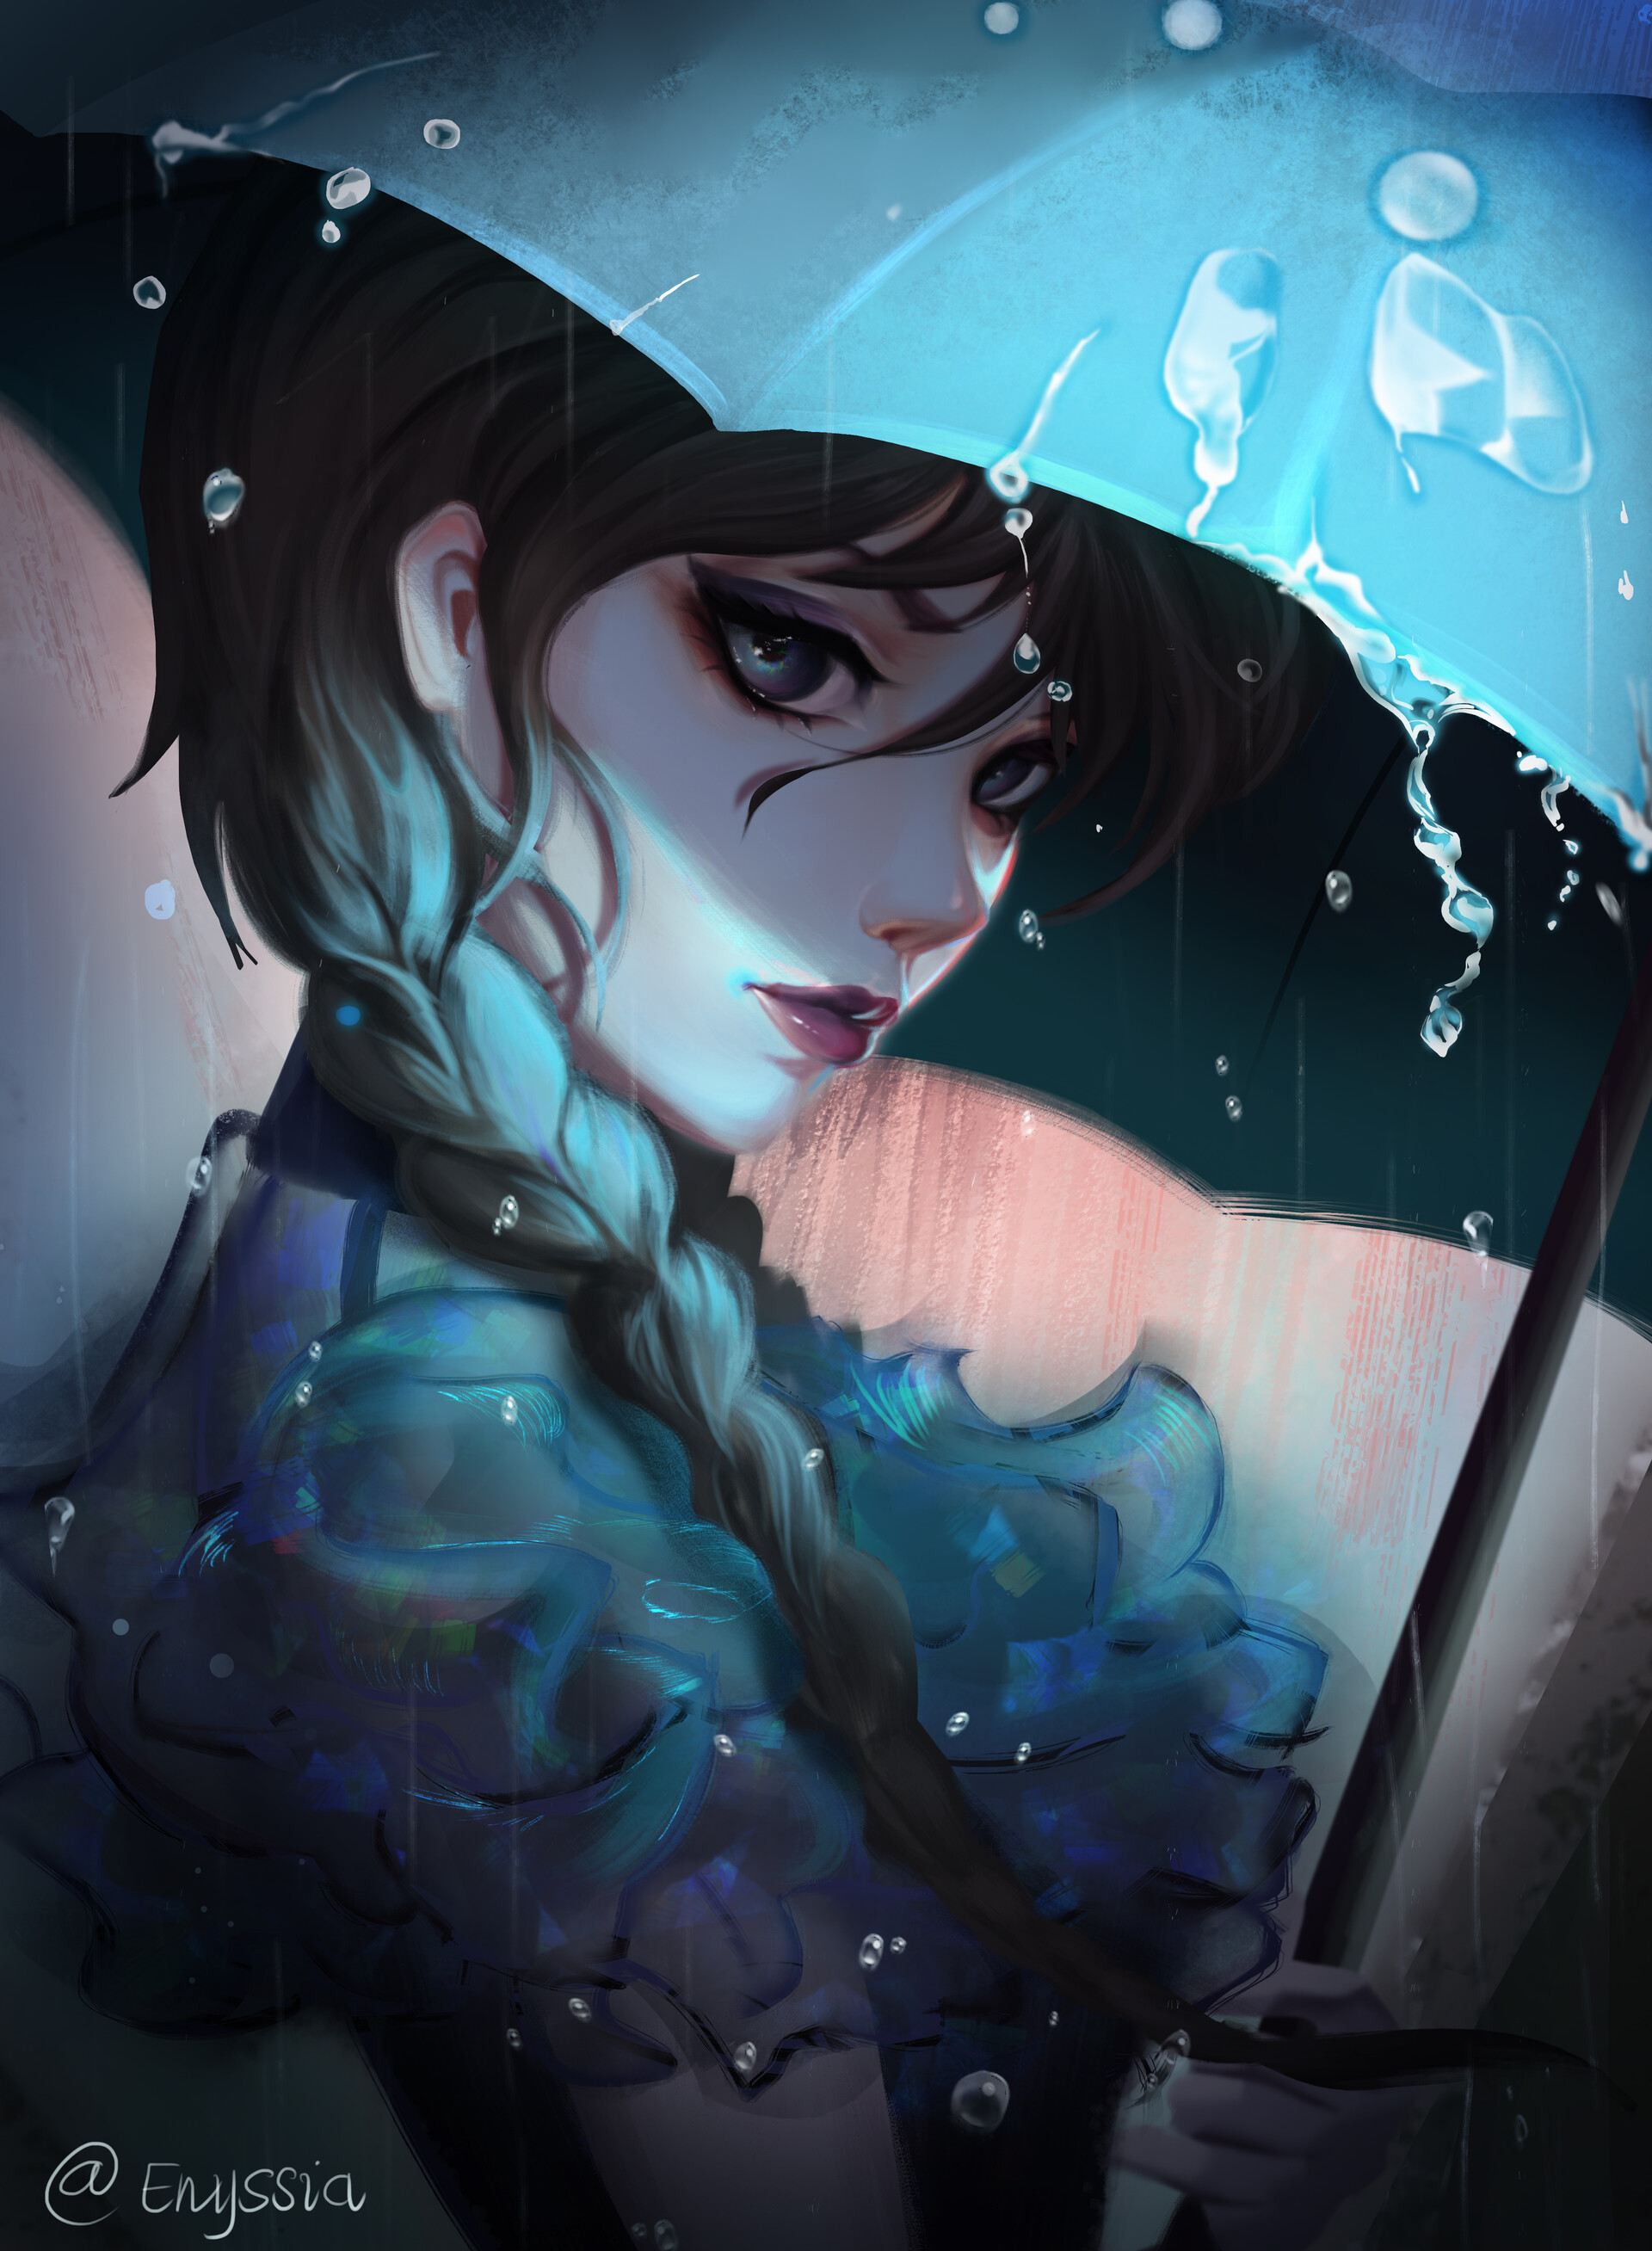 General 1920x2616 Einyssia digital art artwork illustration painting fantasy art fantasy girl rain umbrella dark hair portrait display looking at viewer water drops water braids